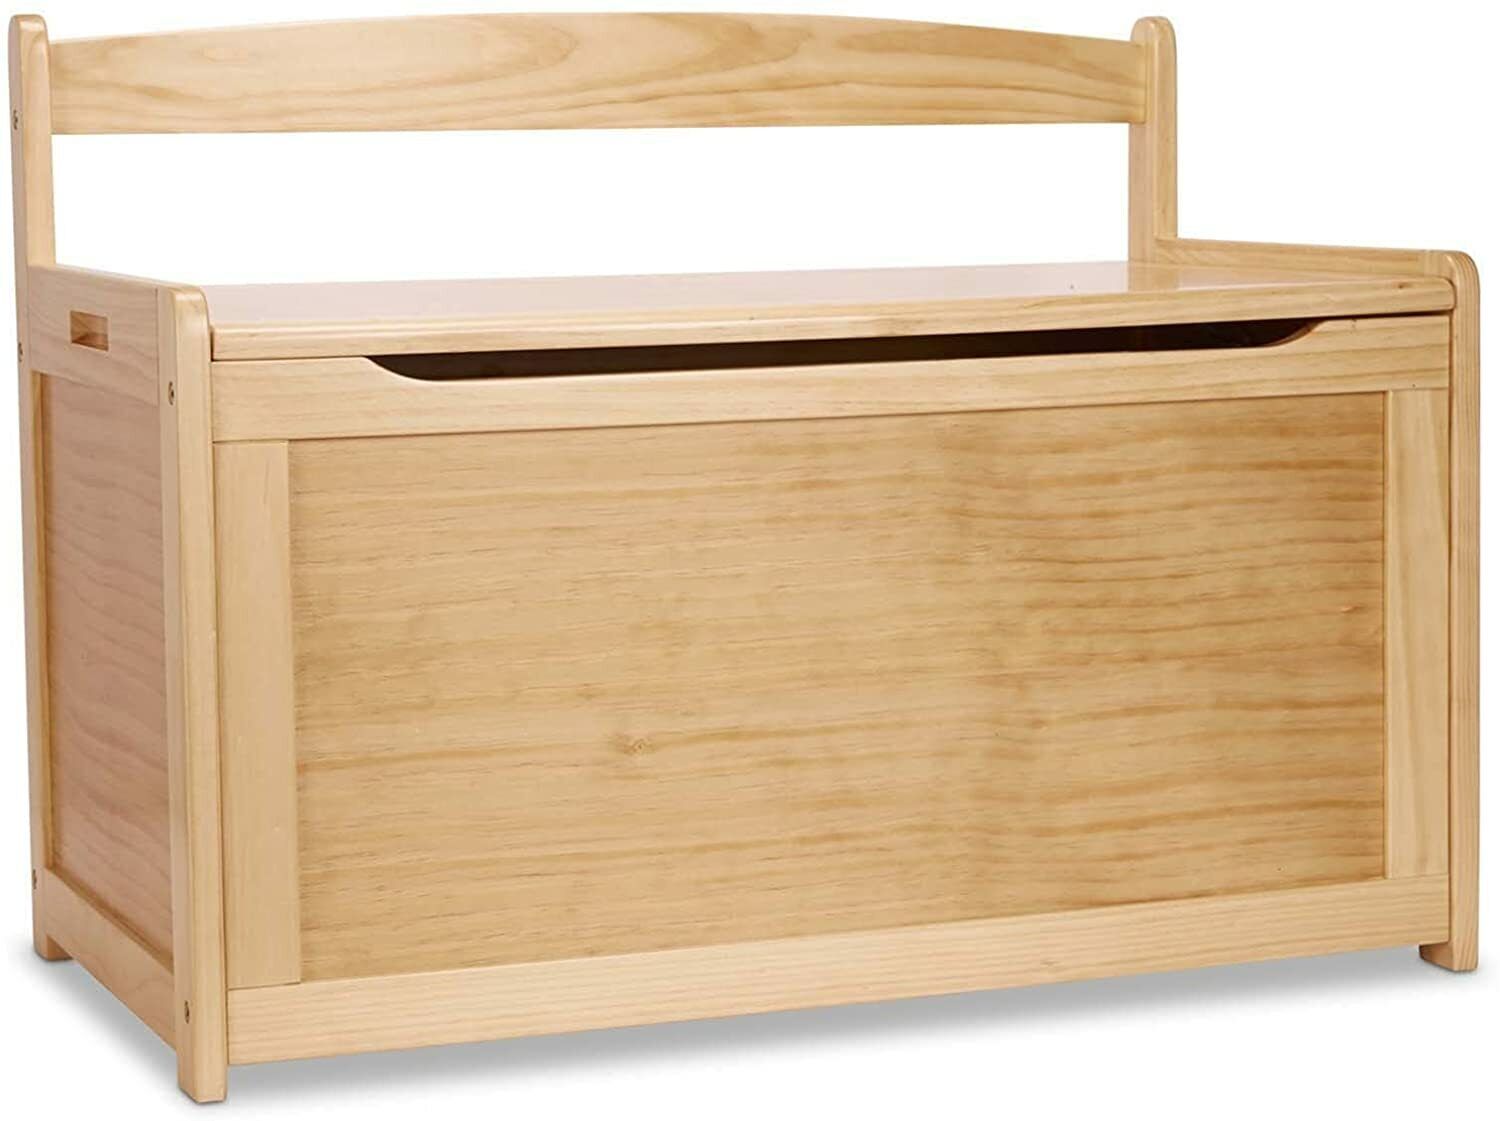 &nbsp; Kids Natural Finish Wooden Toy Box Chest Storage Bench Trunk Play Room Organizer